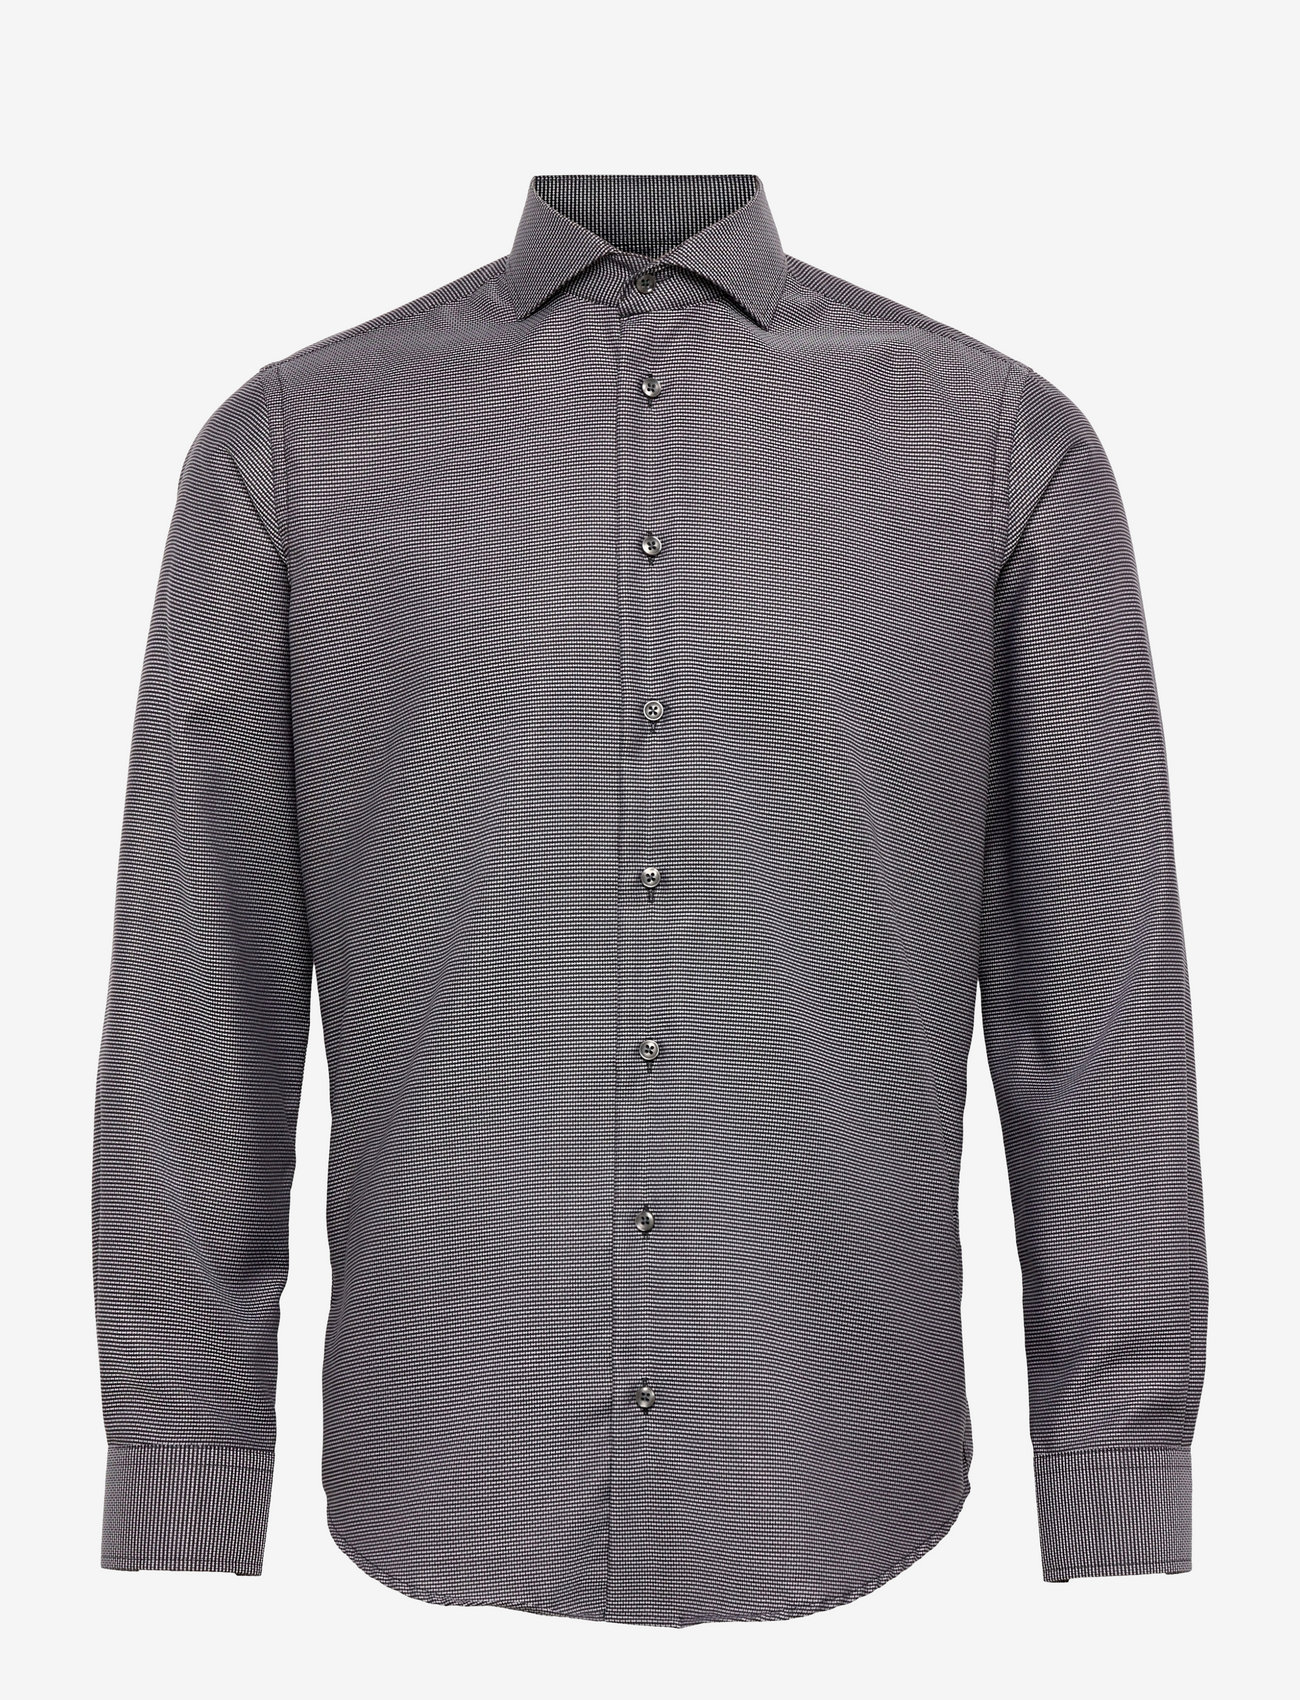 effektivt svært Tap Bosweel Shirts Est. 1937 Slim Fit - Casual shirts | Boozt.com